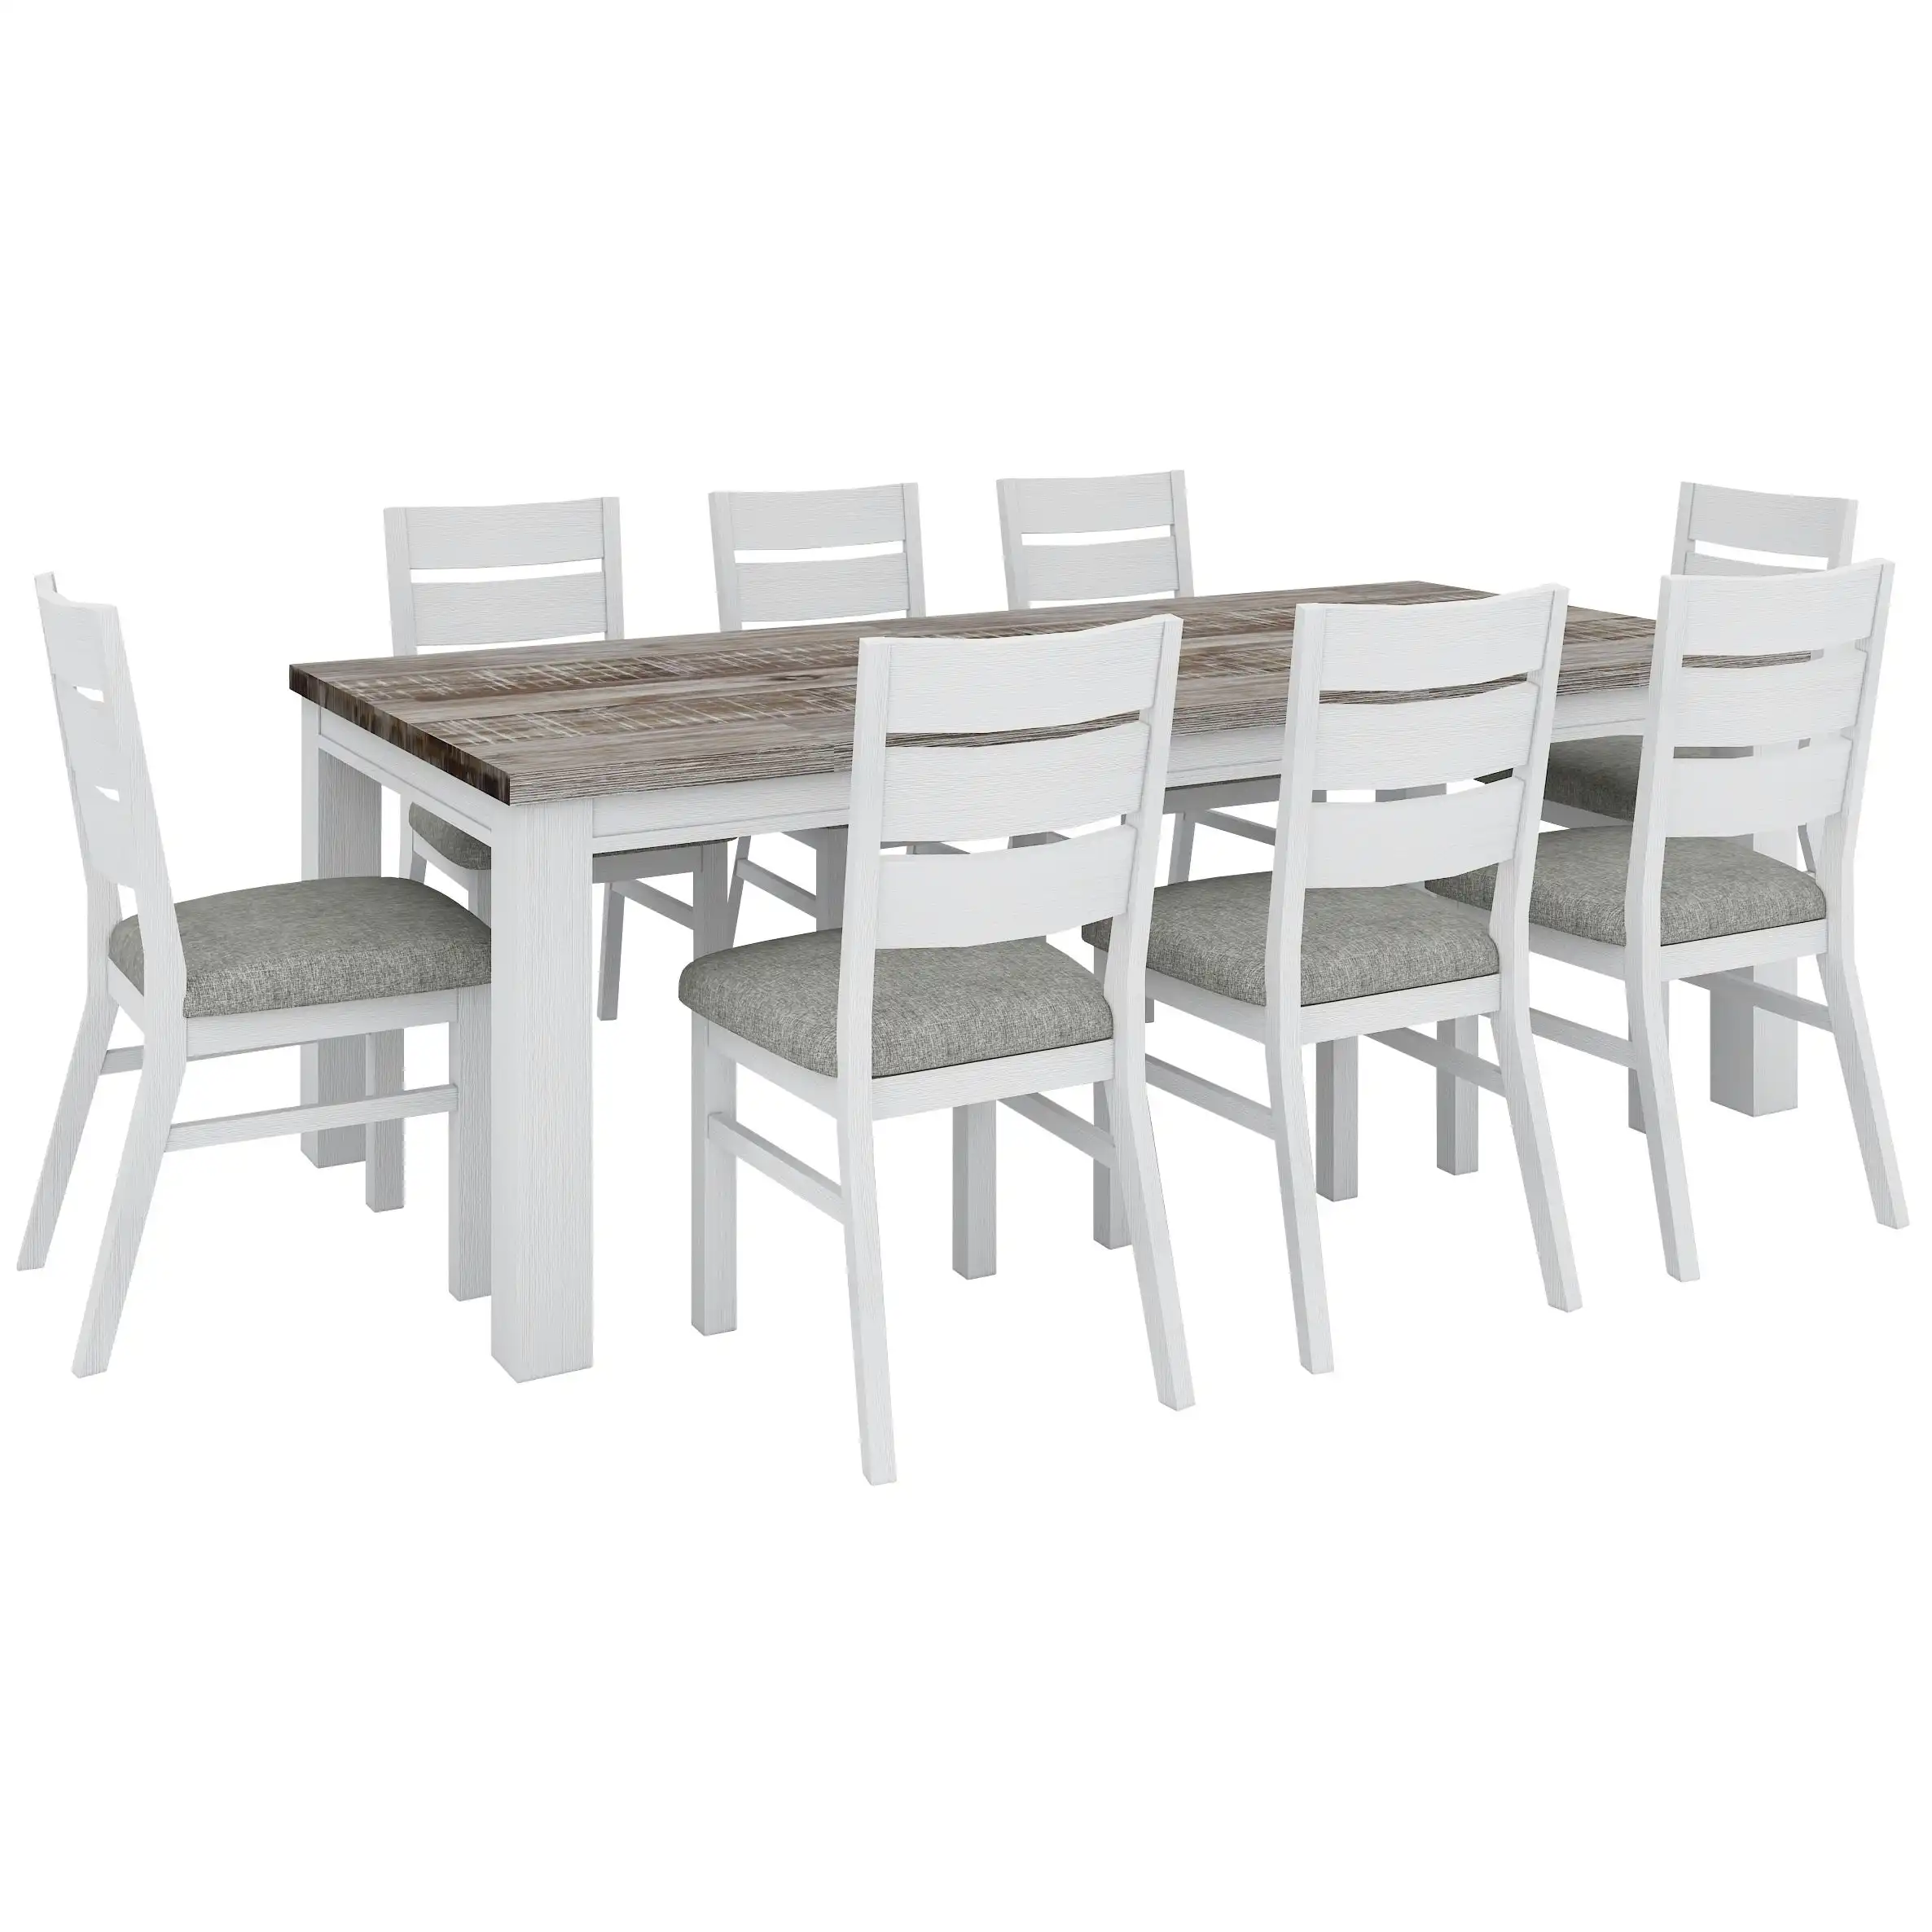 Plumeria 9pc Dining Table Chair Set